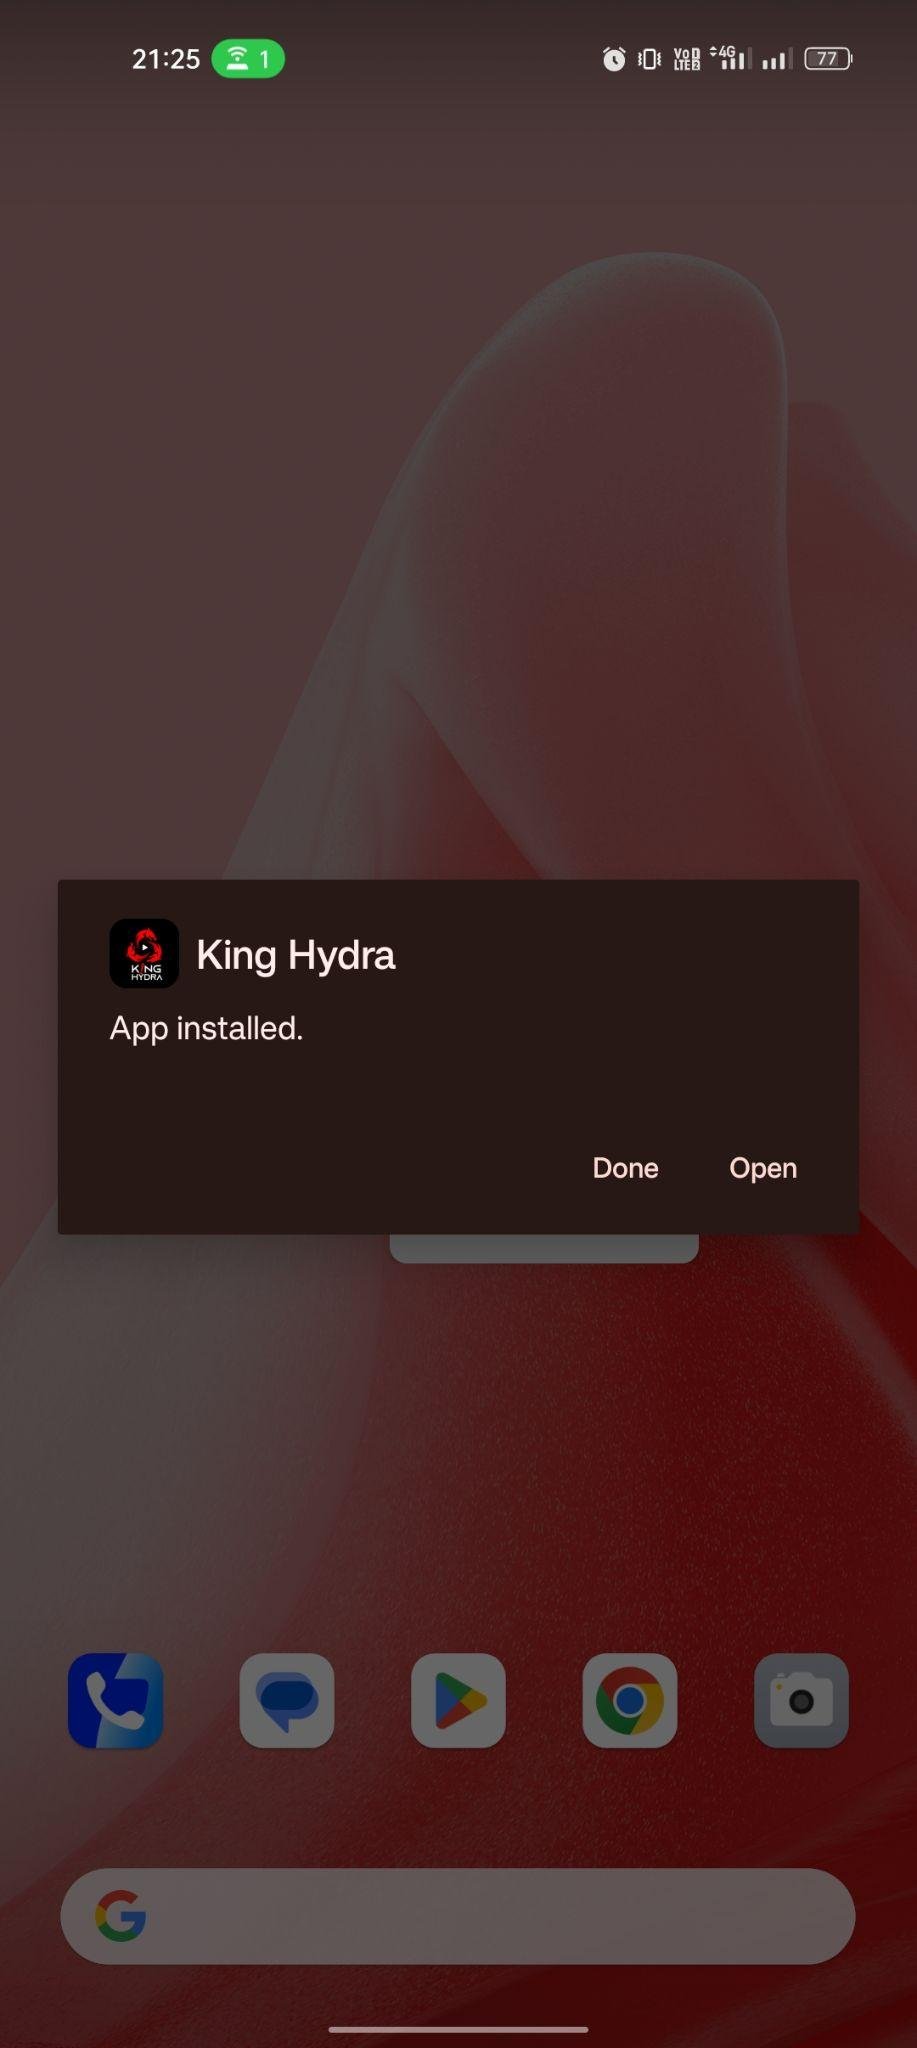 King Hydra apk installed